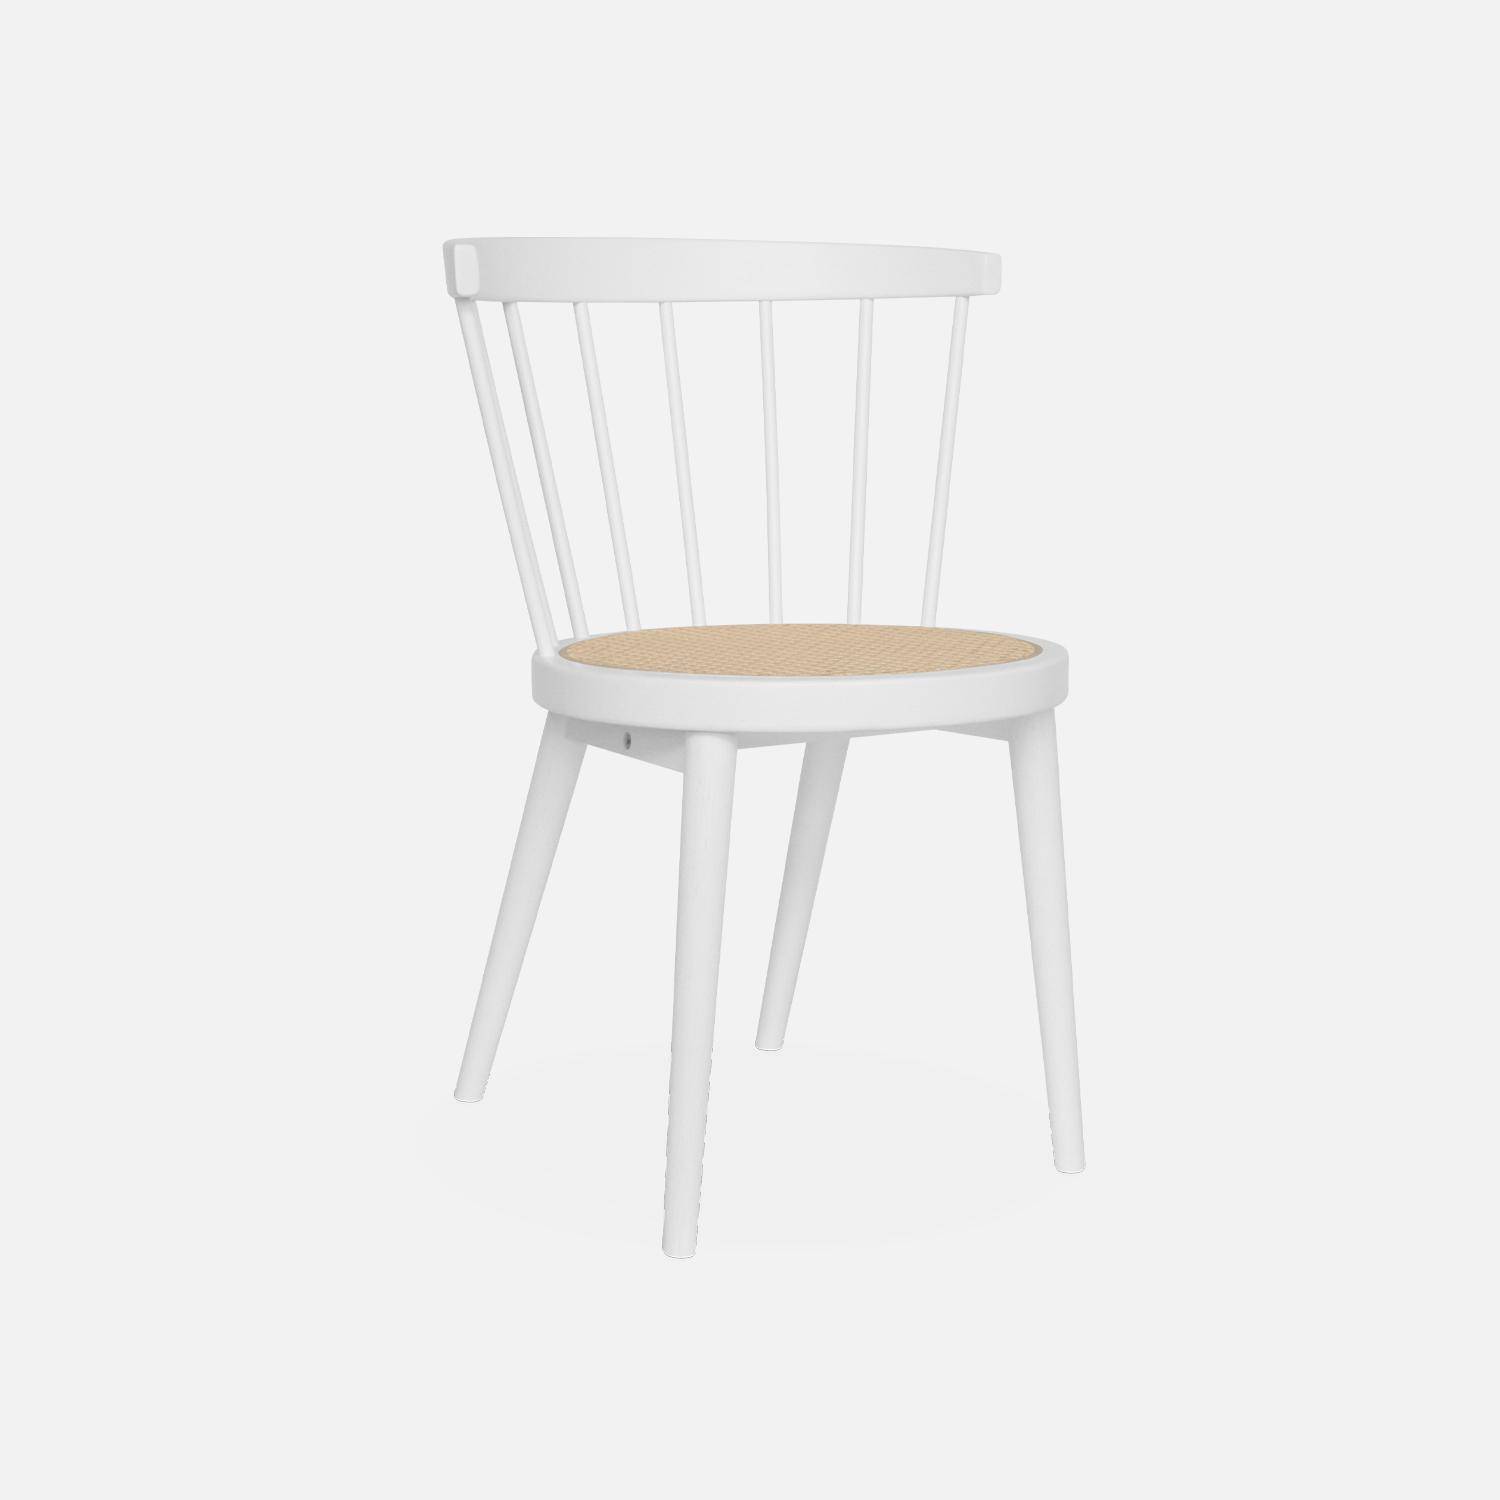 Pair of  Wood and Cane Chairs, Bohemian Spirit, White, L53 x W53.5 x H 6 cm Photo4